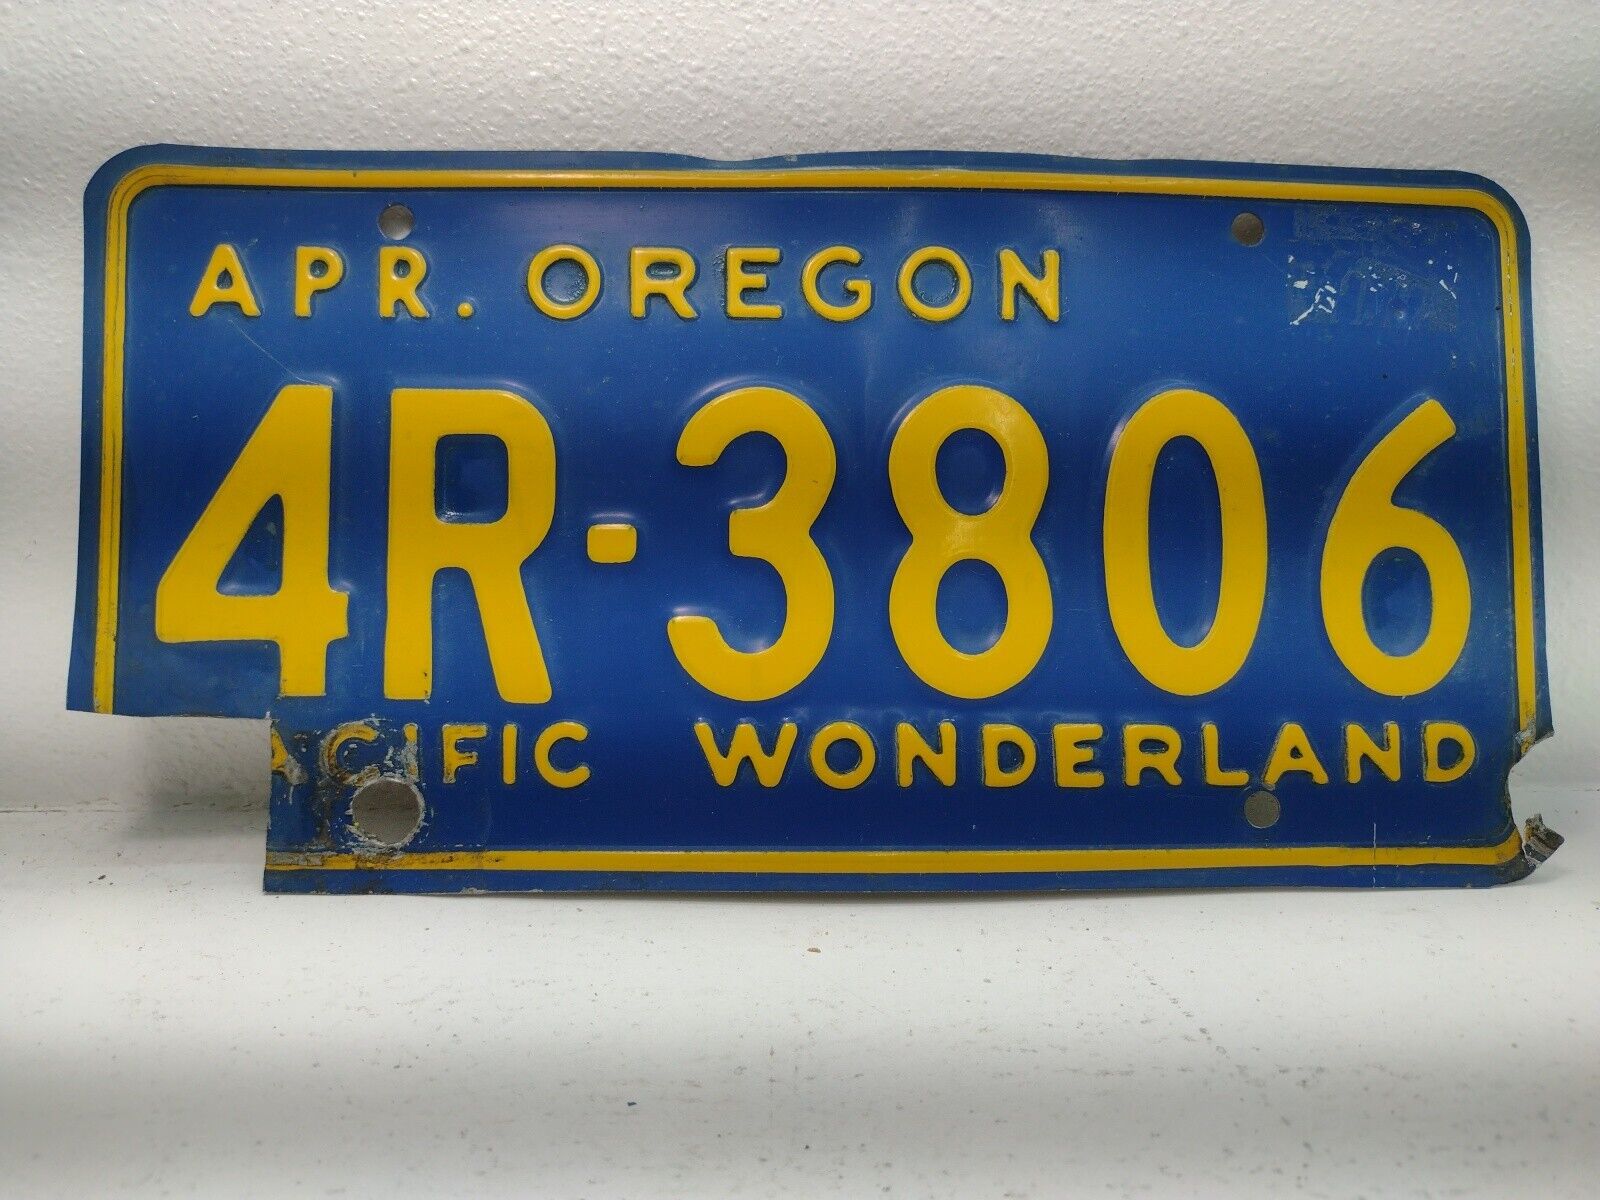 1960's Oregon  Original  Pacific Wonderland  4R - 3806 License Plate